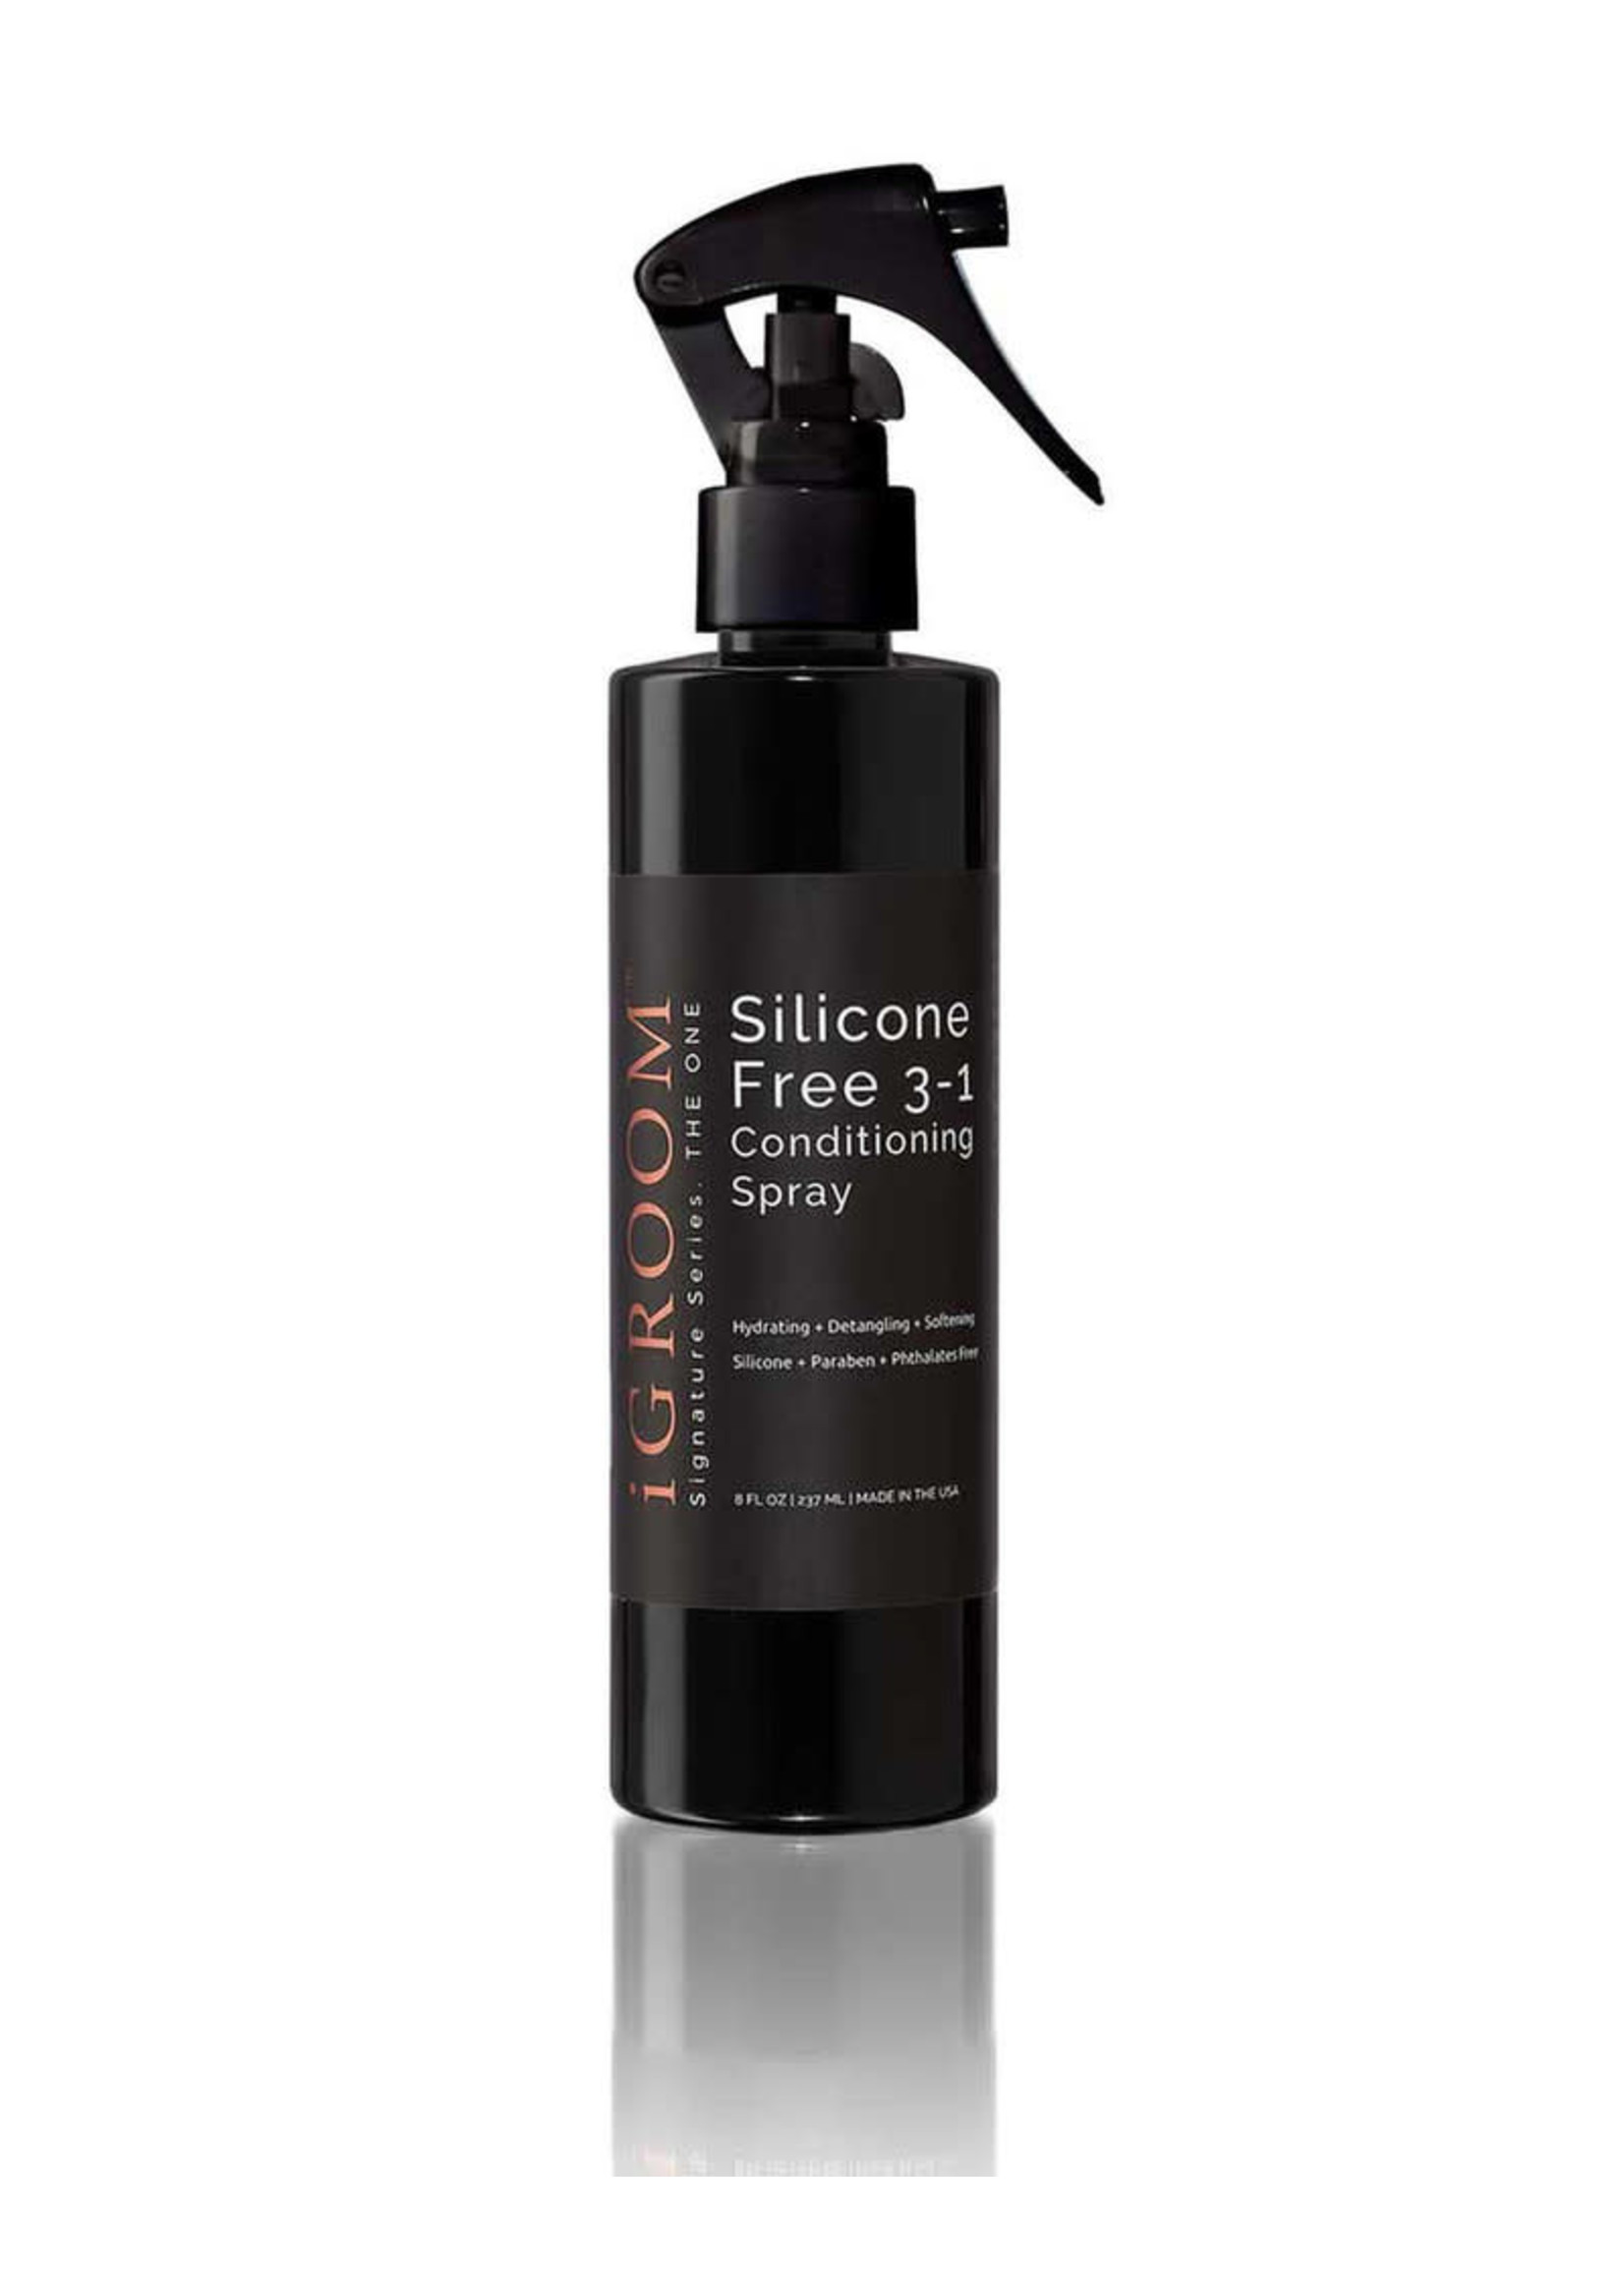 Igroom IGroom Silicone Free 3-1 Conditioning/Detangling Spray 8 oz